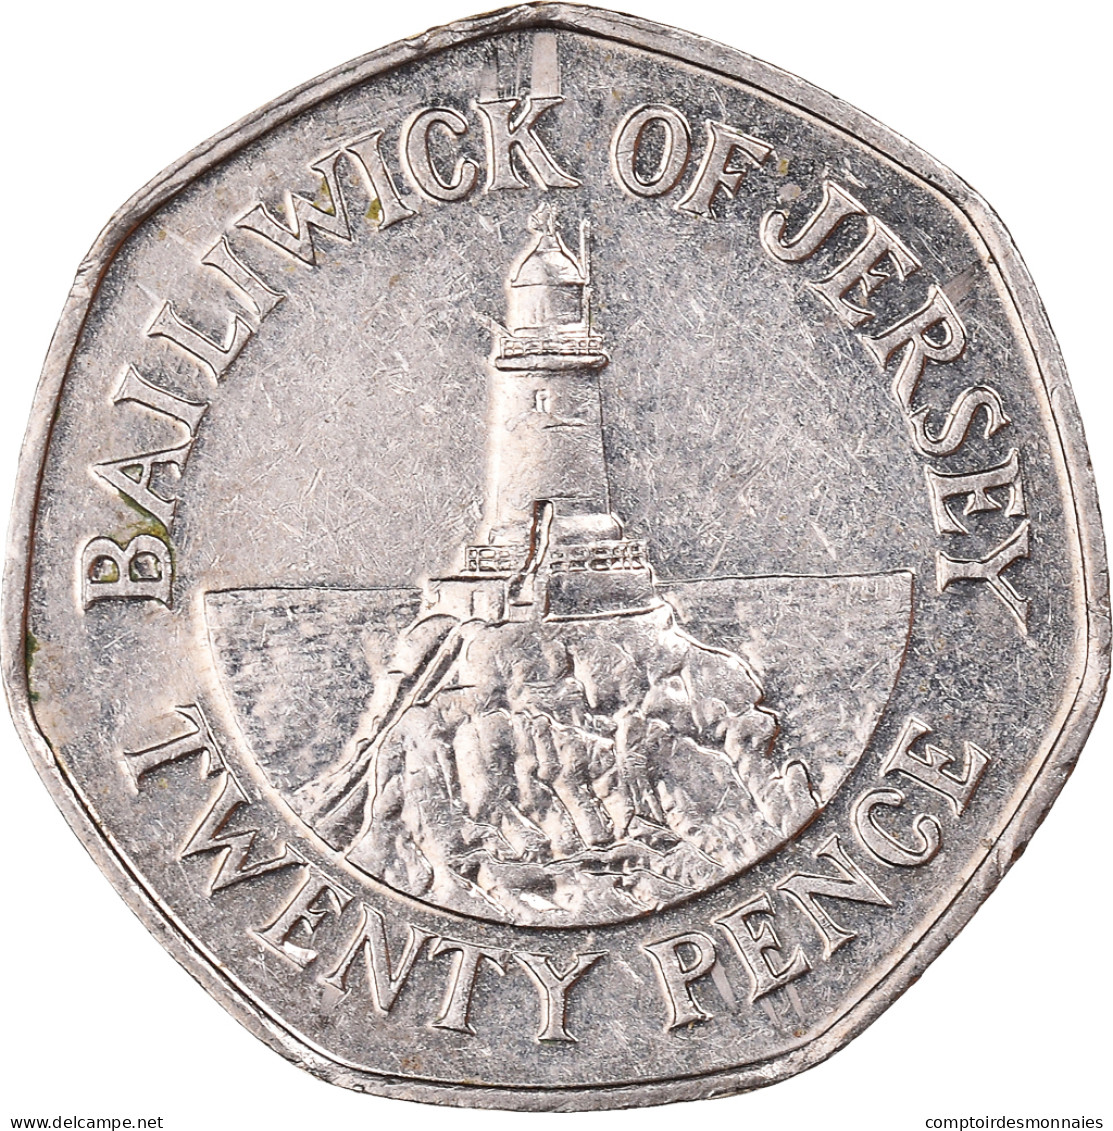 Monnaie, Jersey, 20 Pence, 2014 - Jersey